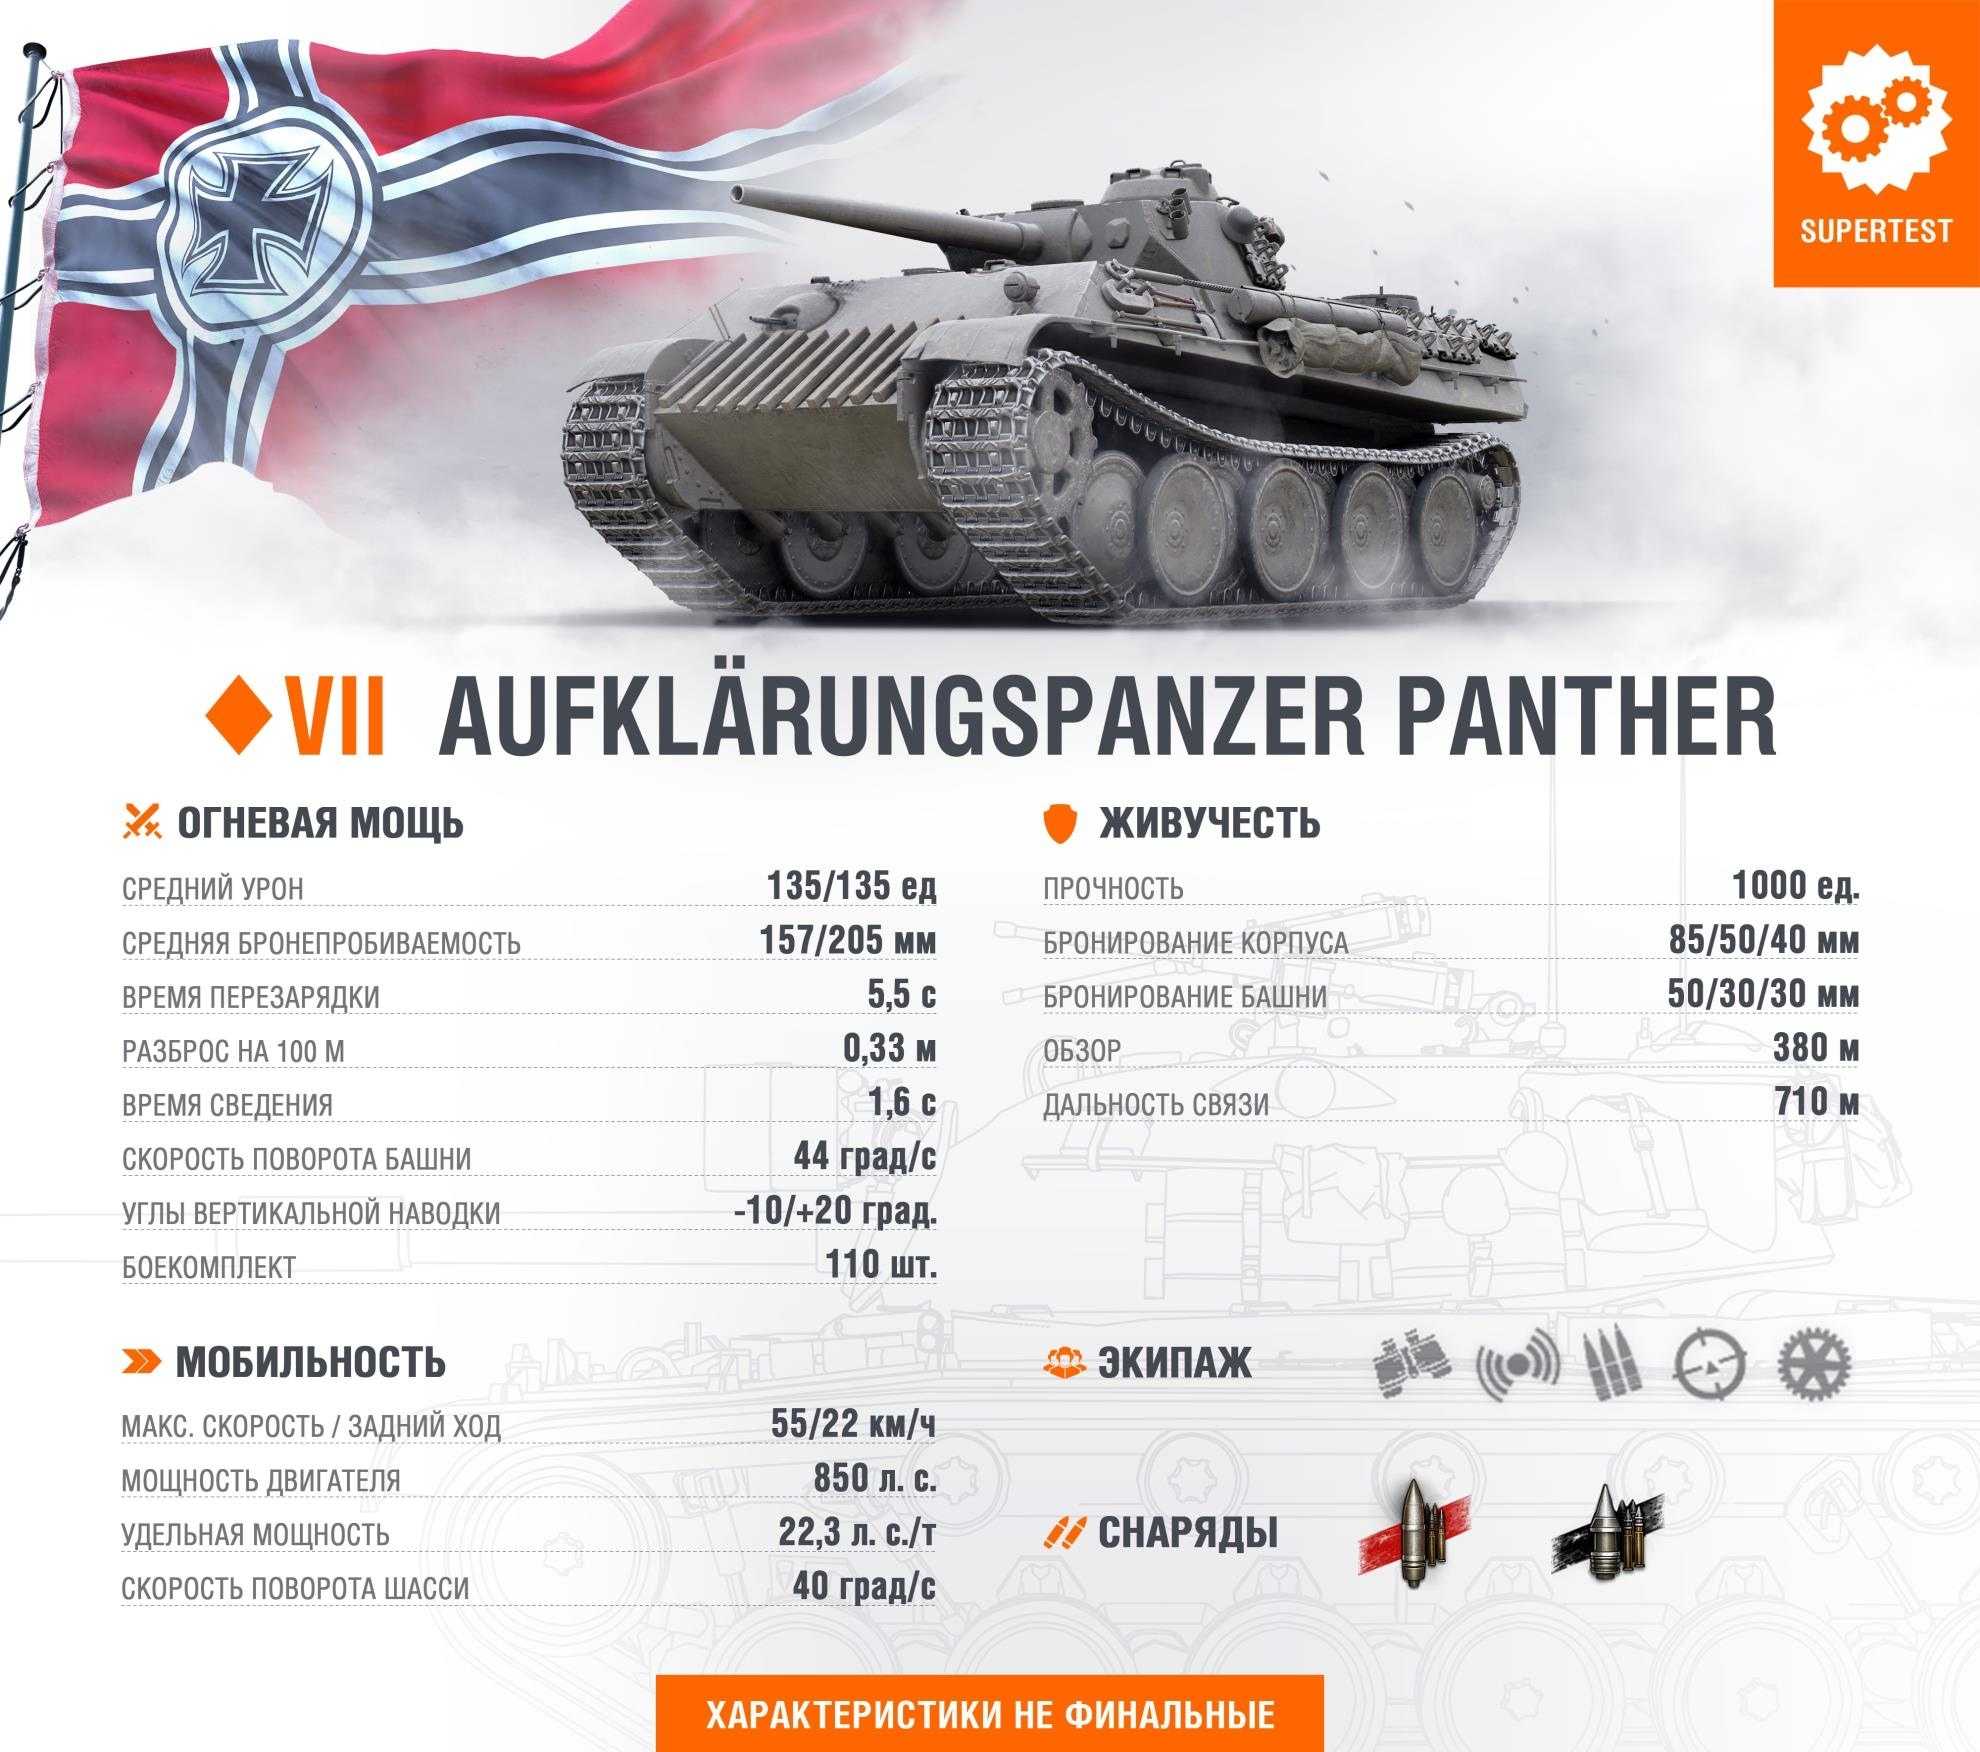 The Strongest (tradução) - Panzer - VAGALUME